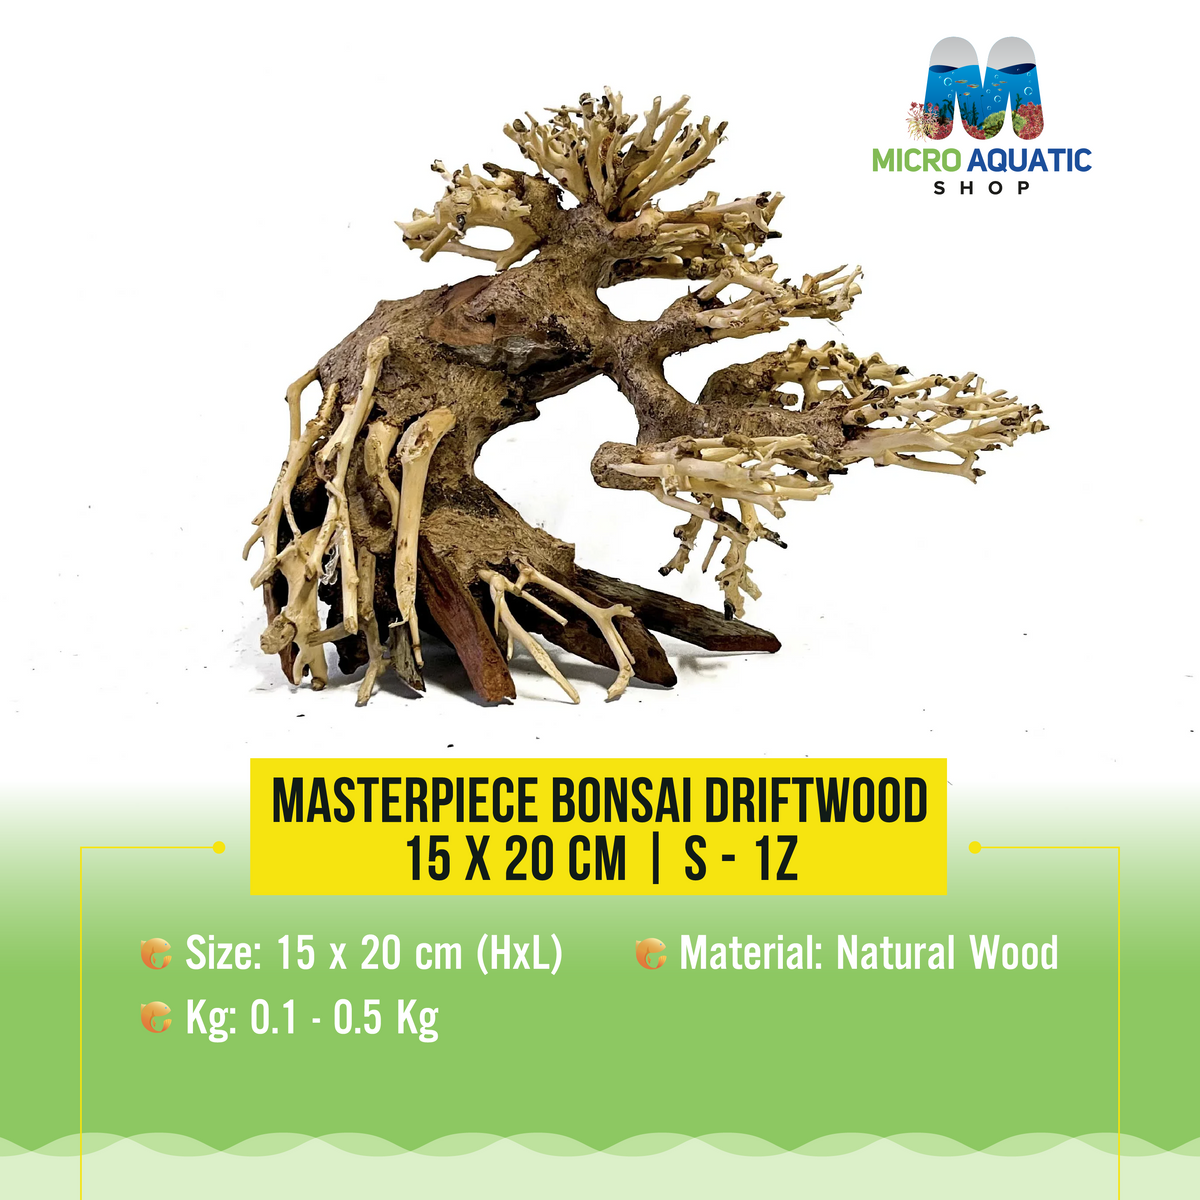 Masterpiece Bonsai Driftwood - 15 x 20 cm | S - 1z